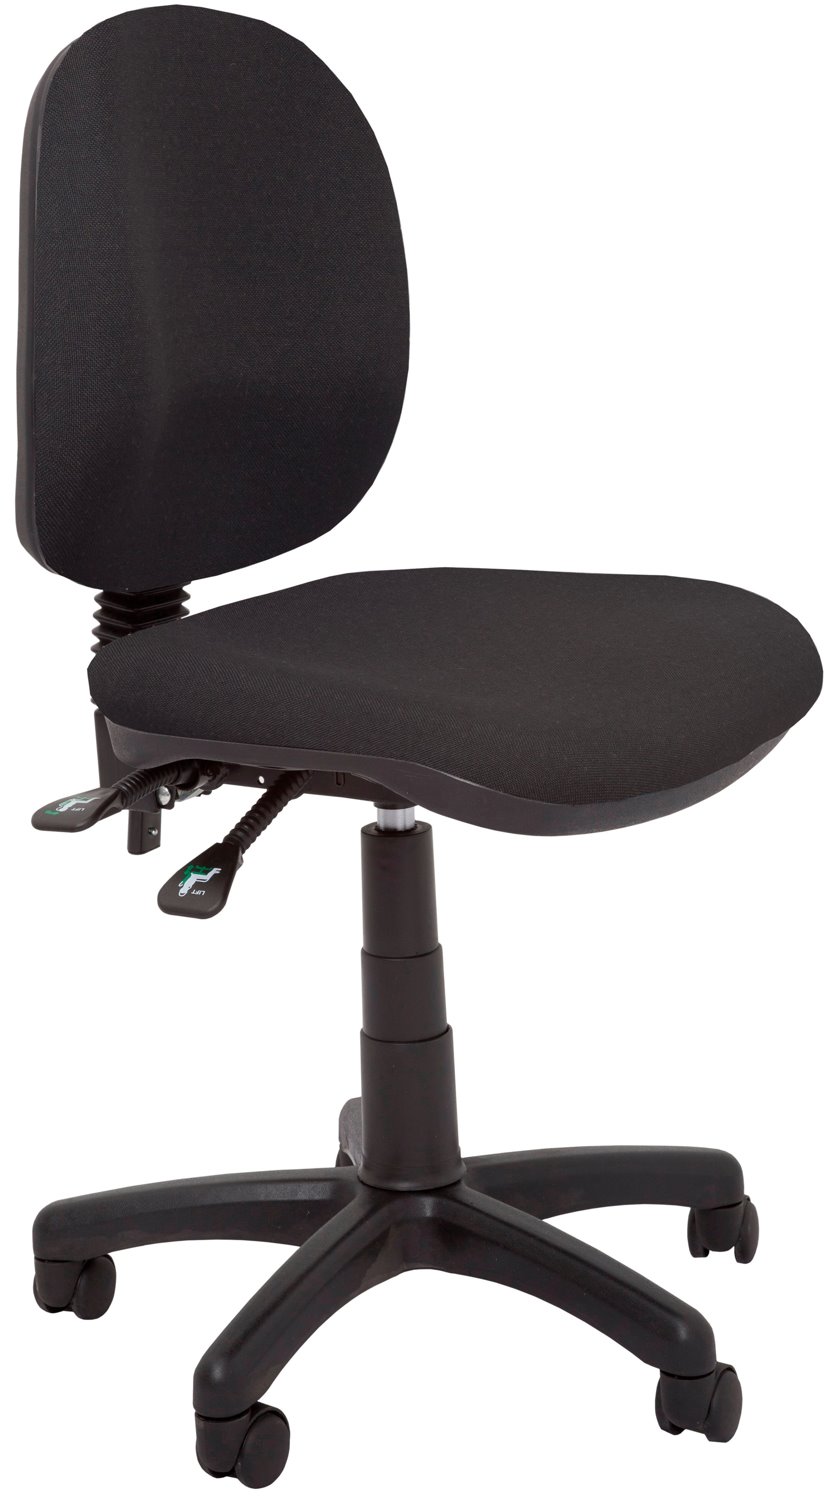 Chair - "Budget Medium Back Operator Chair 3 Lever Fully Ergonomic Mechanism - 100 KG Weight Rating Gas Lift - Seat Pan & Back Rest Tilt - Black 5 Star Base On Castors"